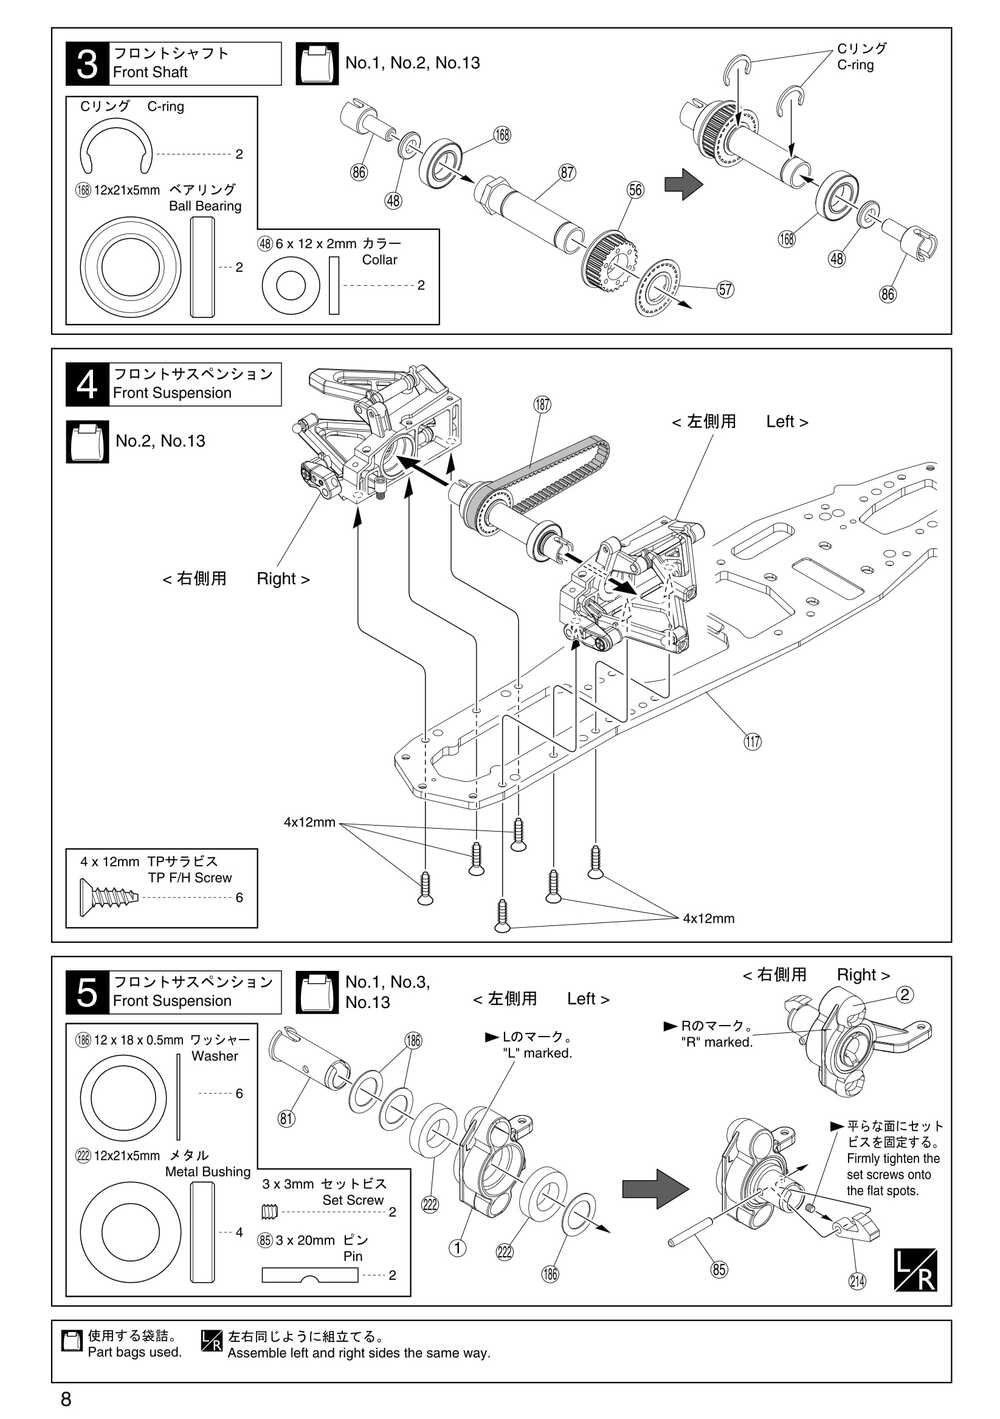 Kyosho - 31041 - Fantom Sports - Manual - Page 08